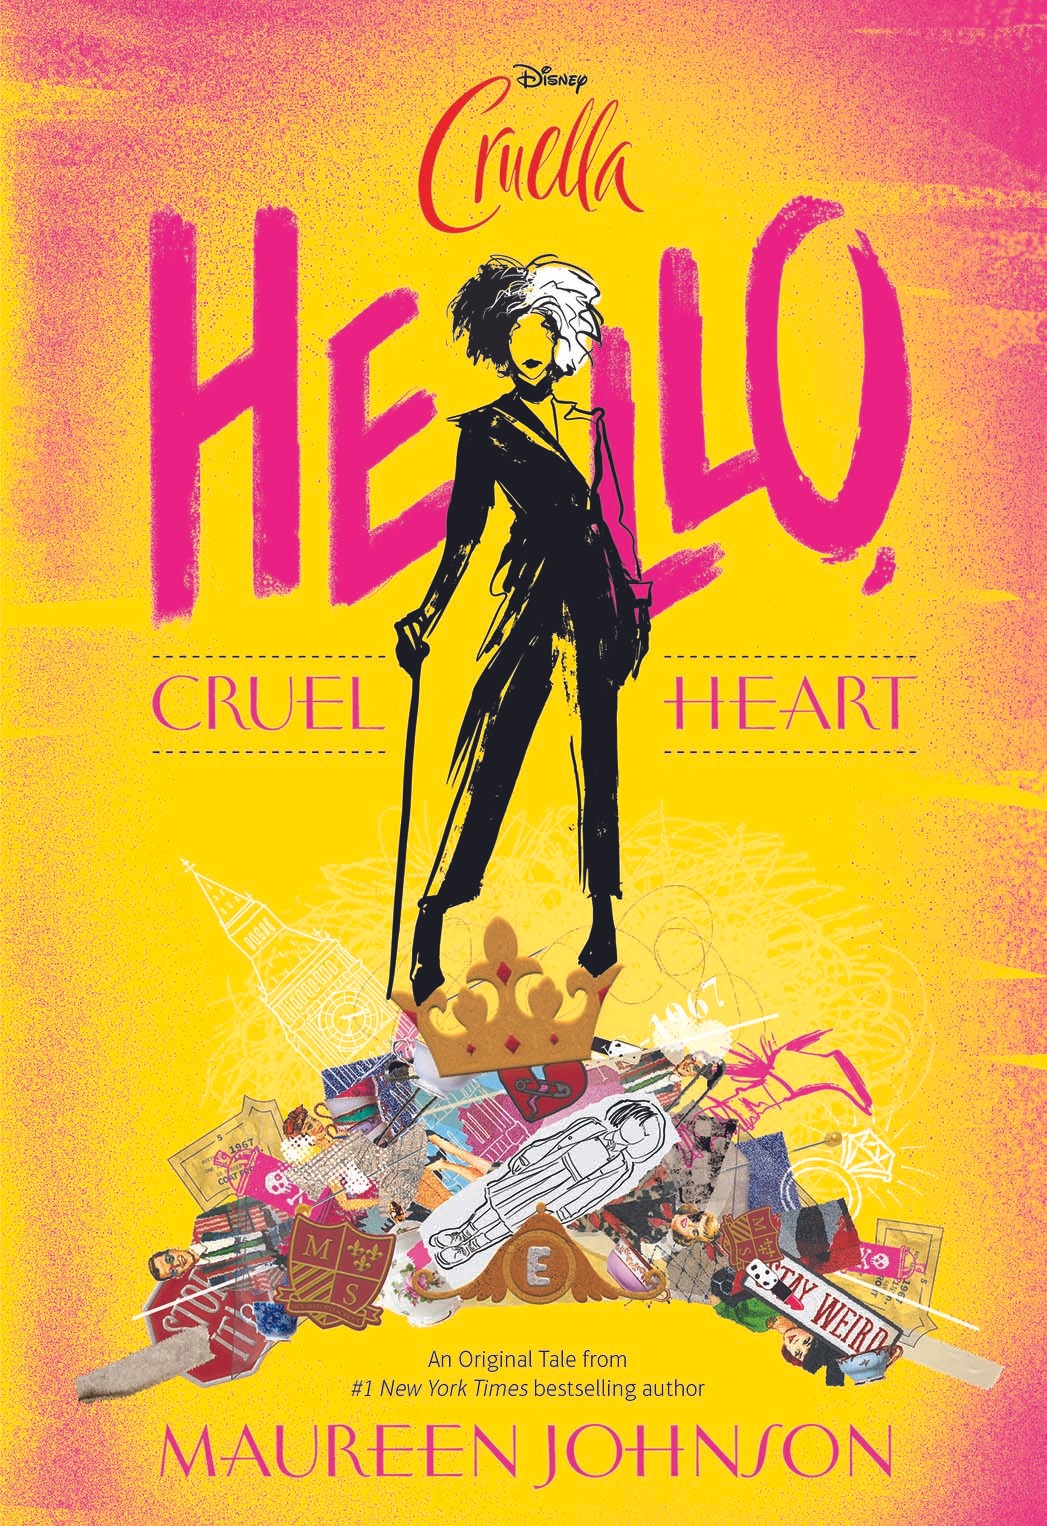 “Hello, Cruel Heart” Gives Readers a Taste of the Upcoming “Cruella” Film